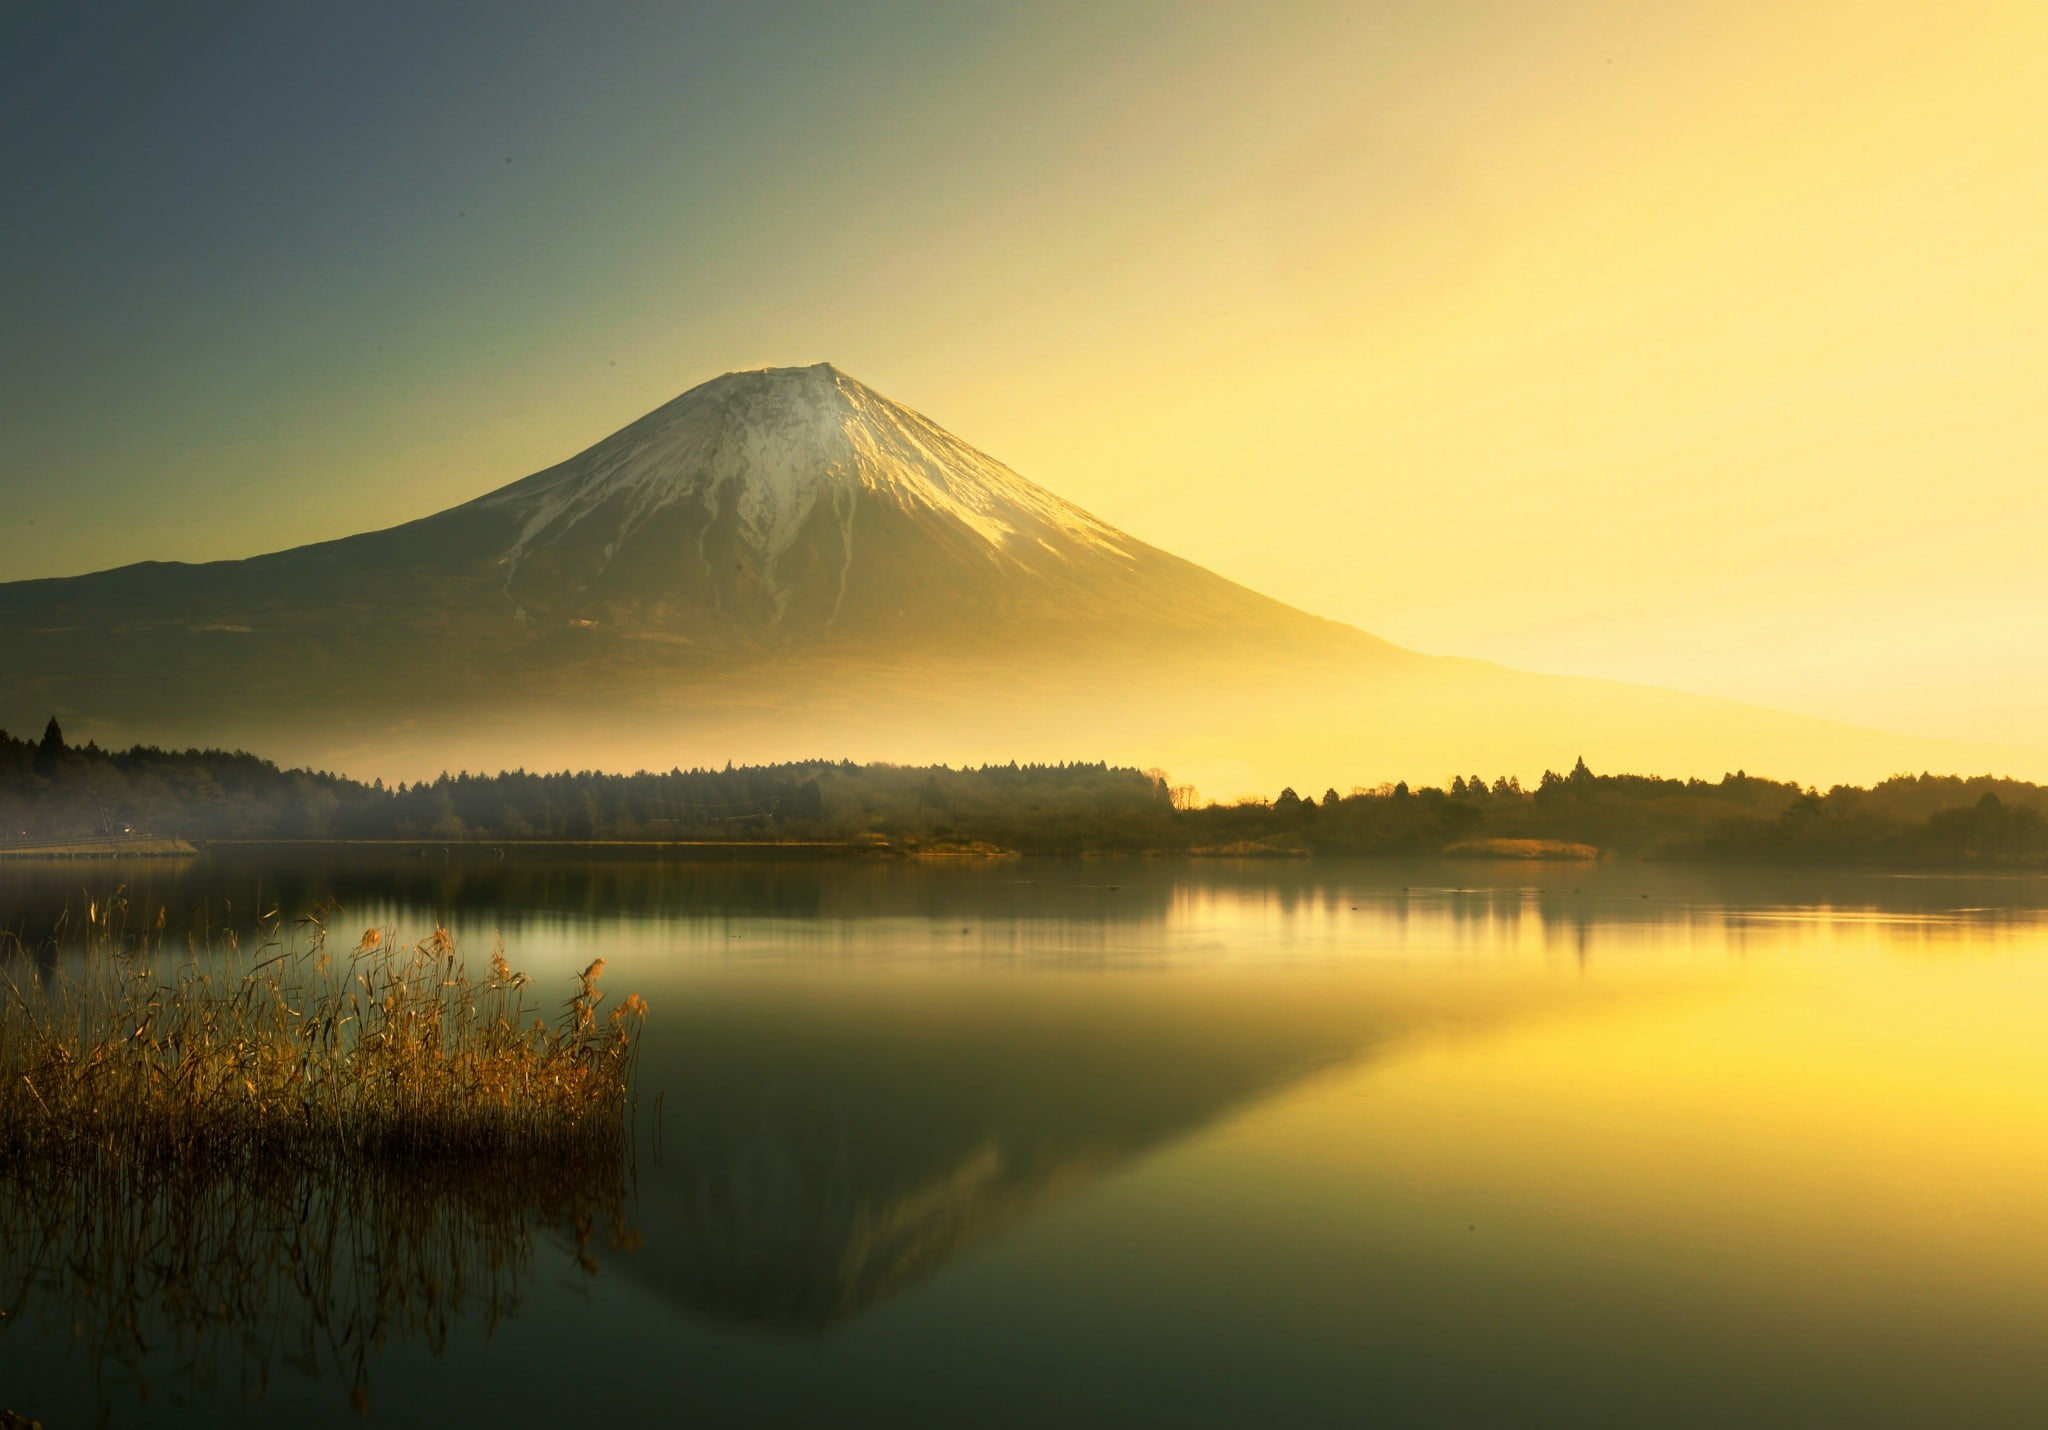 reflective photograph of Mt. Fuji, Japan